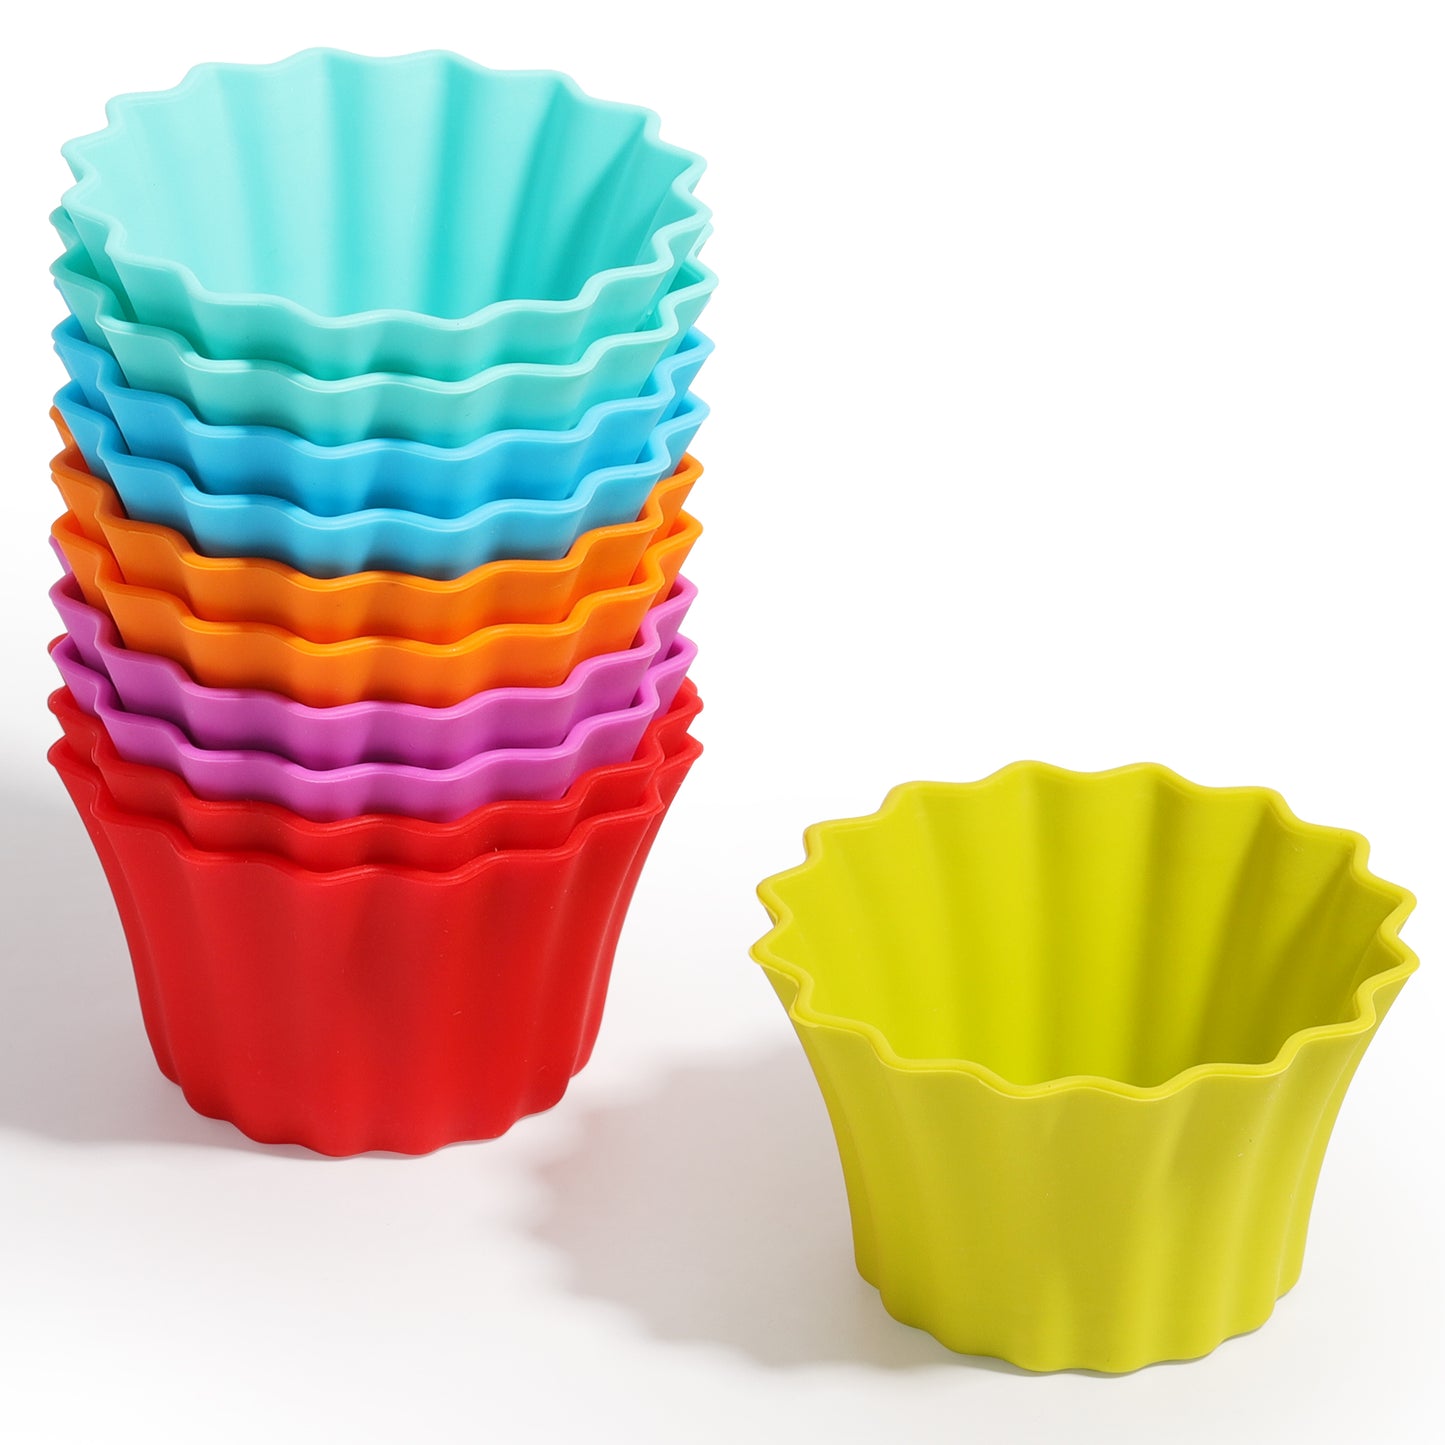 UDIYO 30Pcs Silicone Baking Cups Cupcake Liners - Reusable